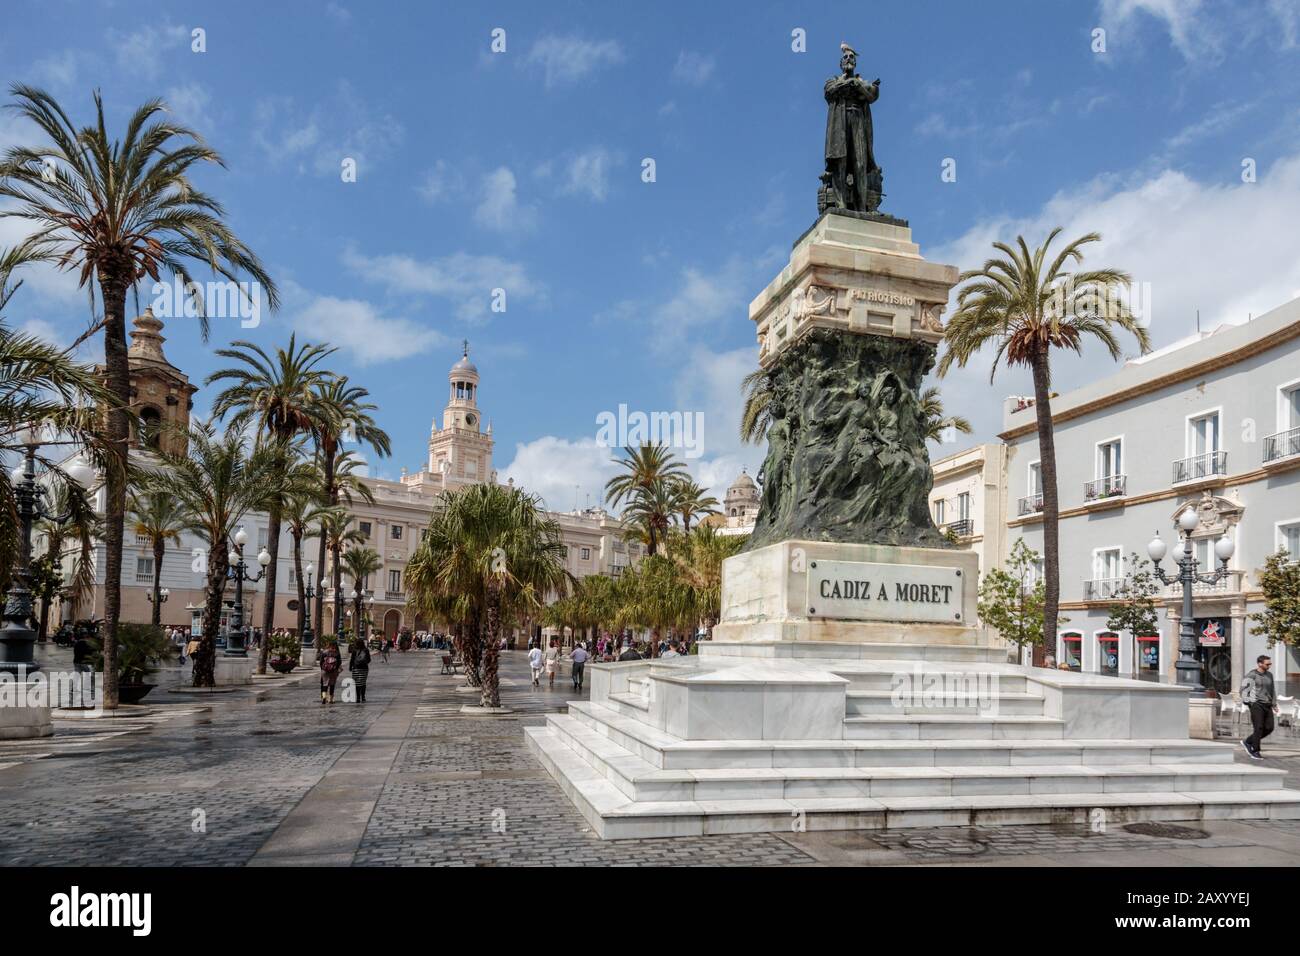 Statue of Cadiz politician Segismundo Moret Cadiz, Plaza de San Juan de Dios, Cadiz, Andalusia, Spain. Stock Photo